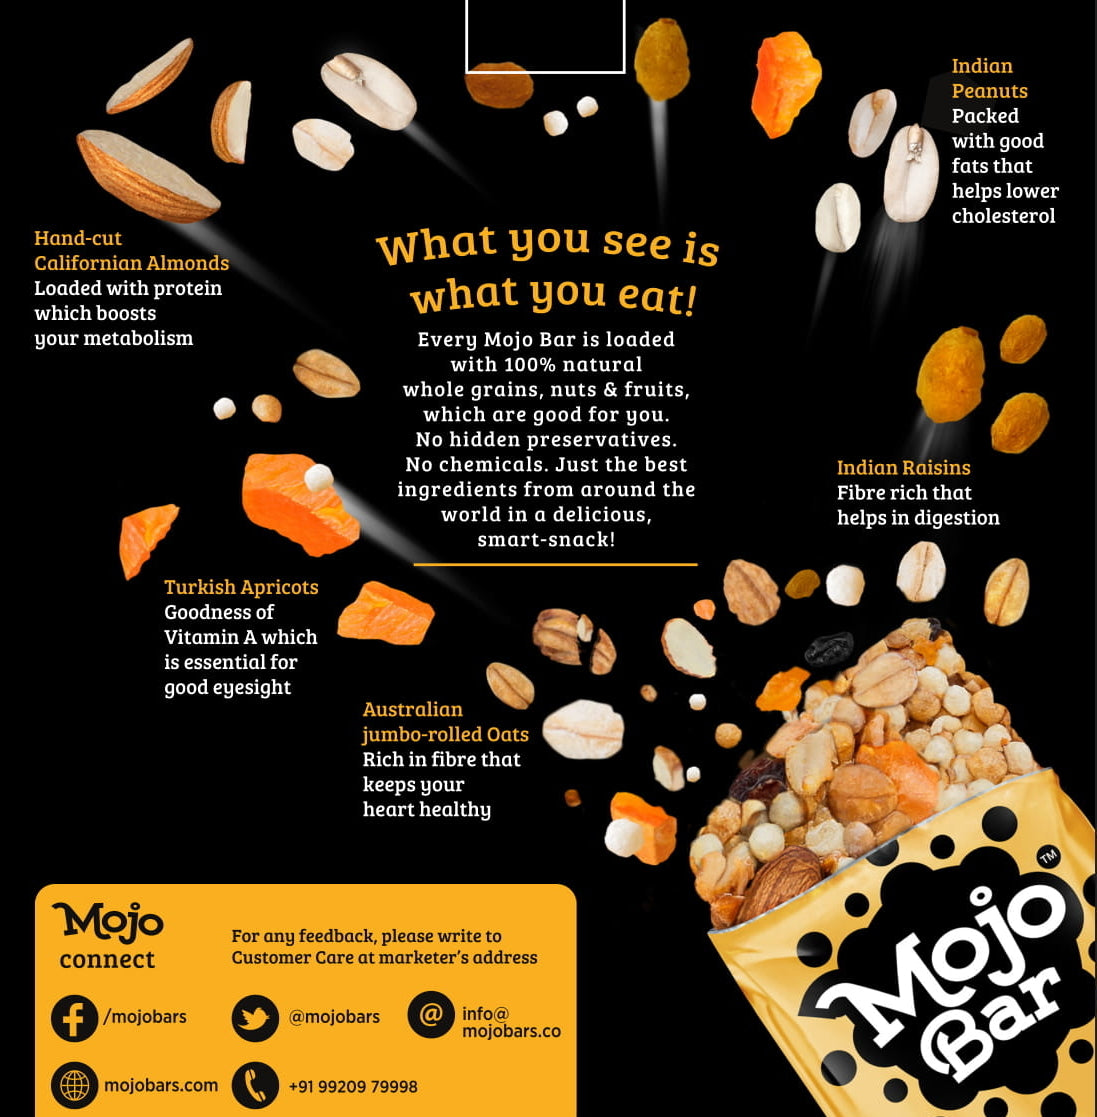 Nutty Apricot + Fibre, 480g (Pack of 15) - Mojo Snacks